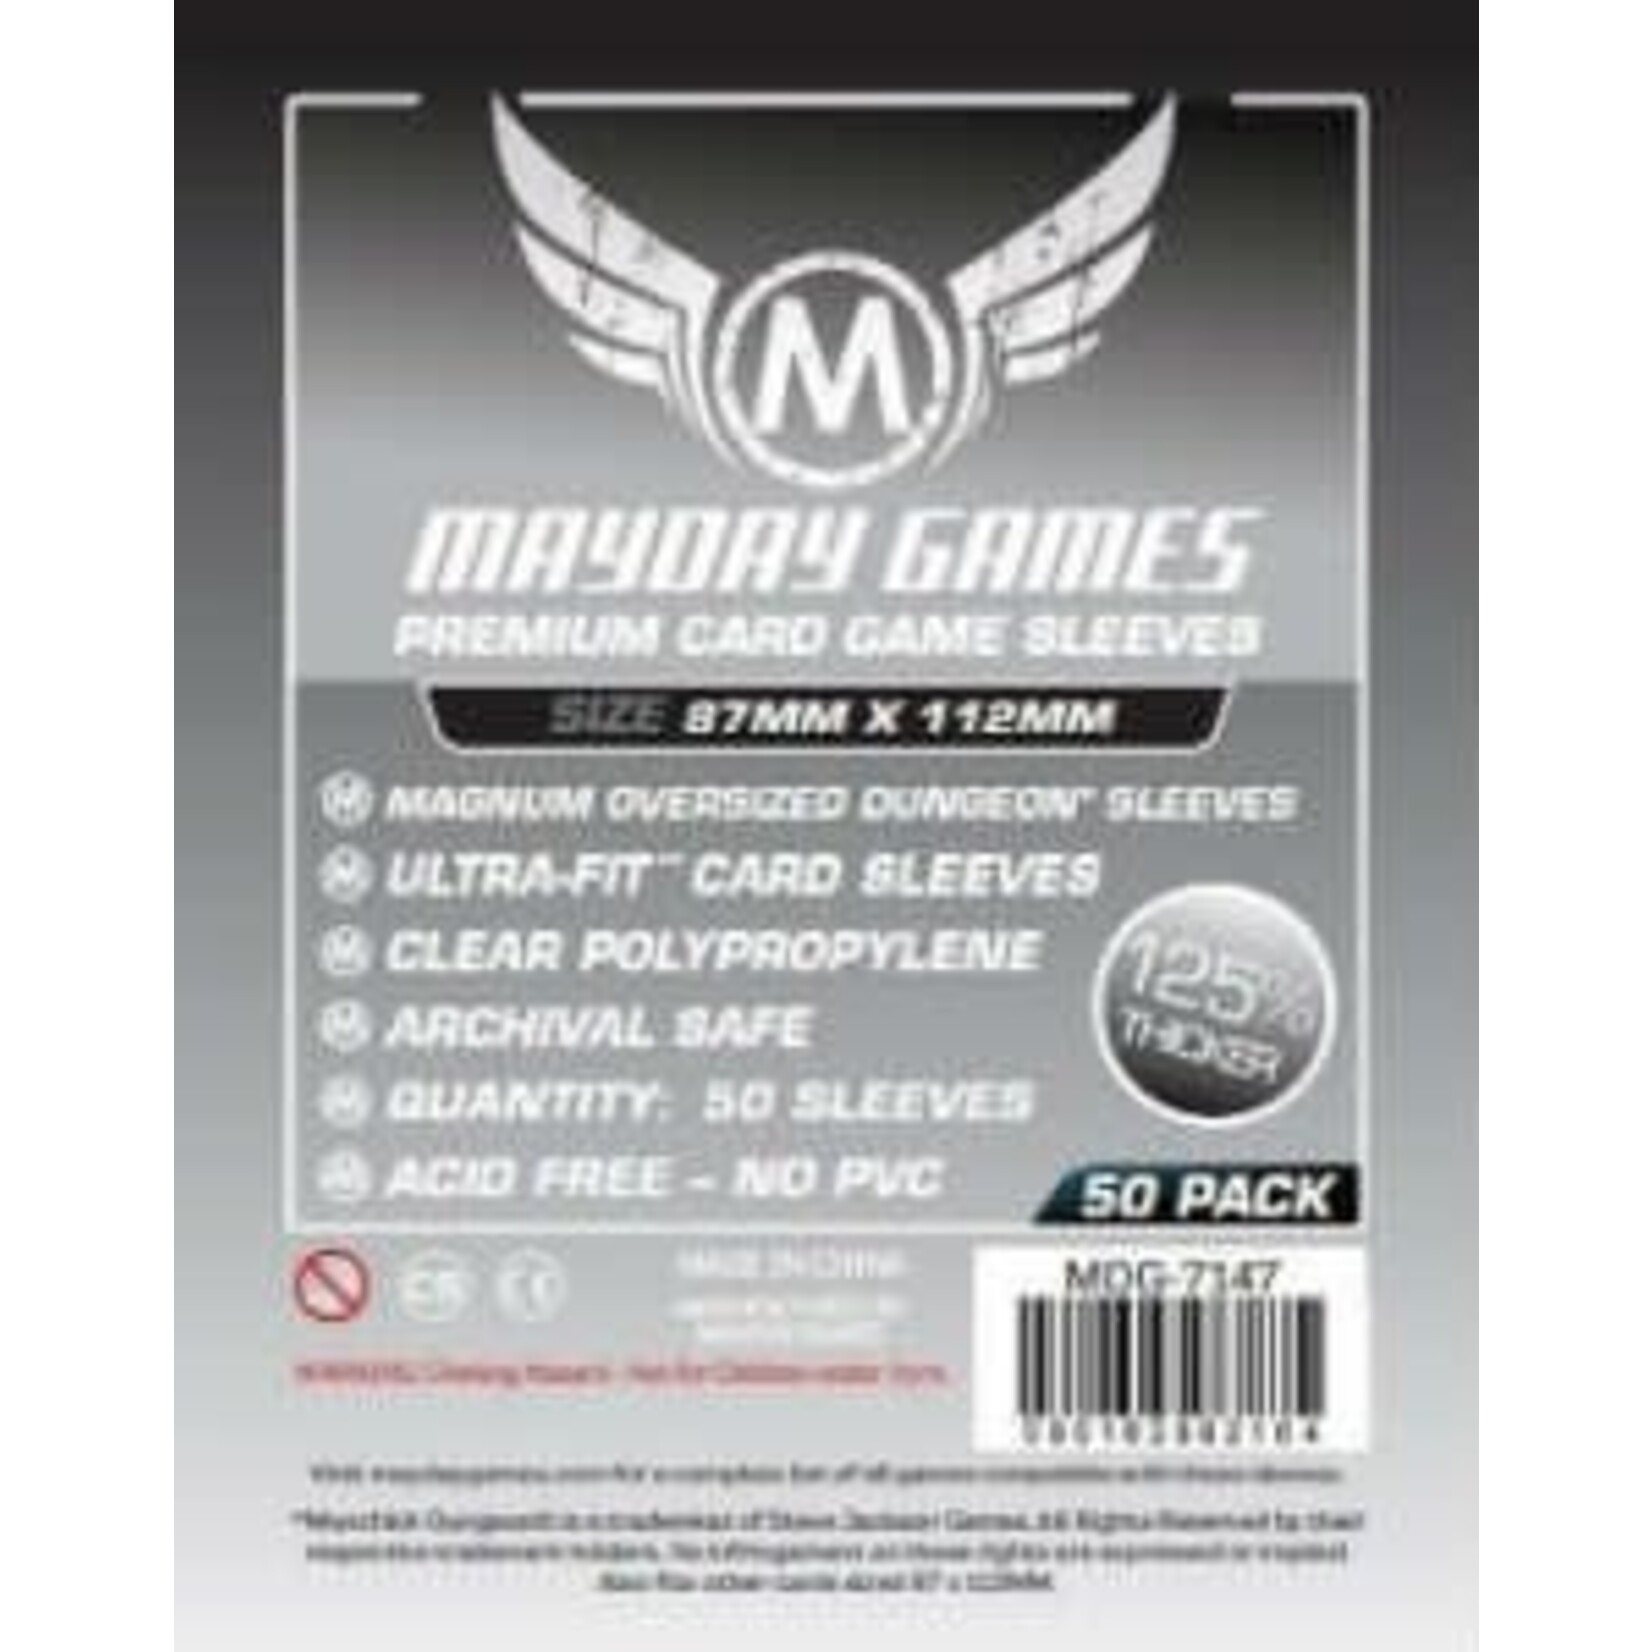 Mayday Games Magnum Oversized Dungeon Premium